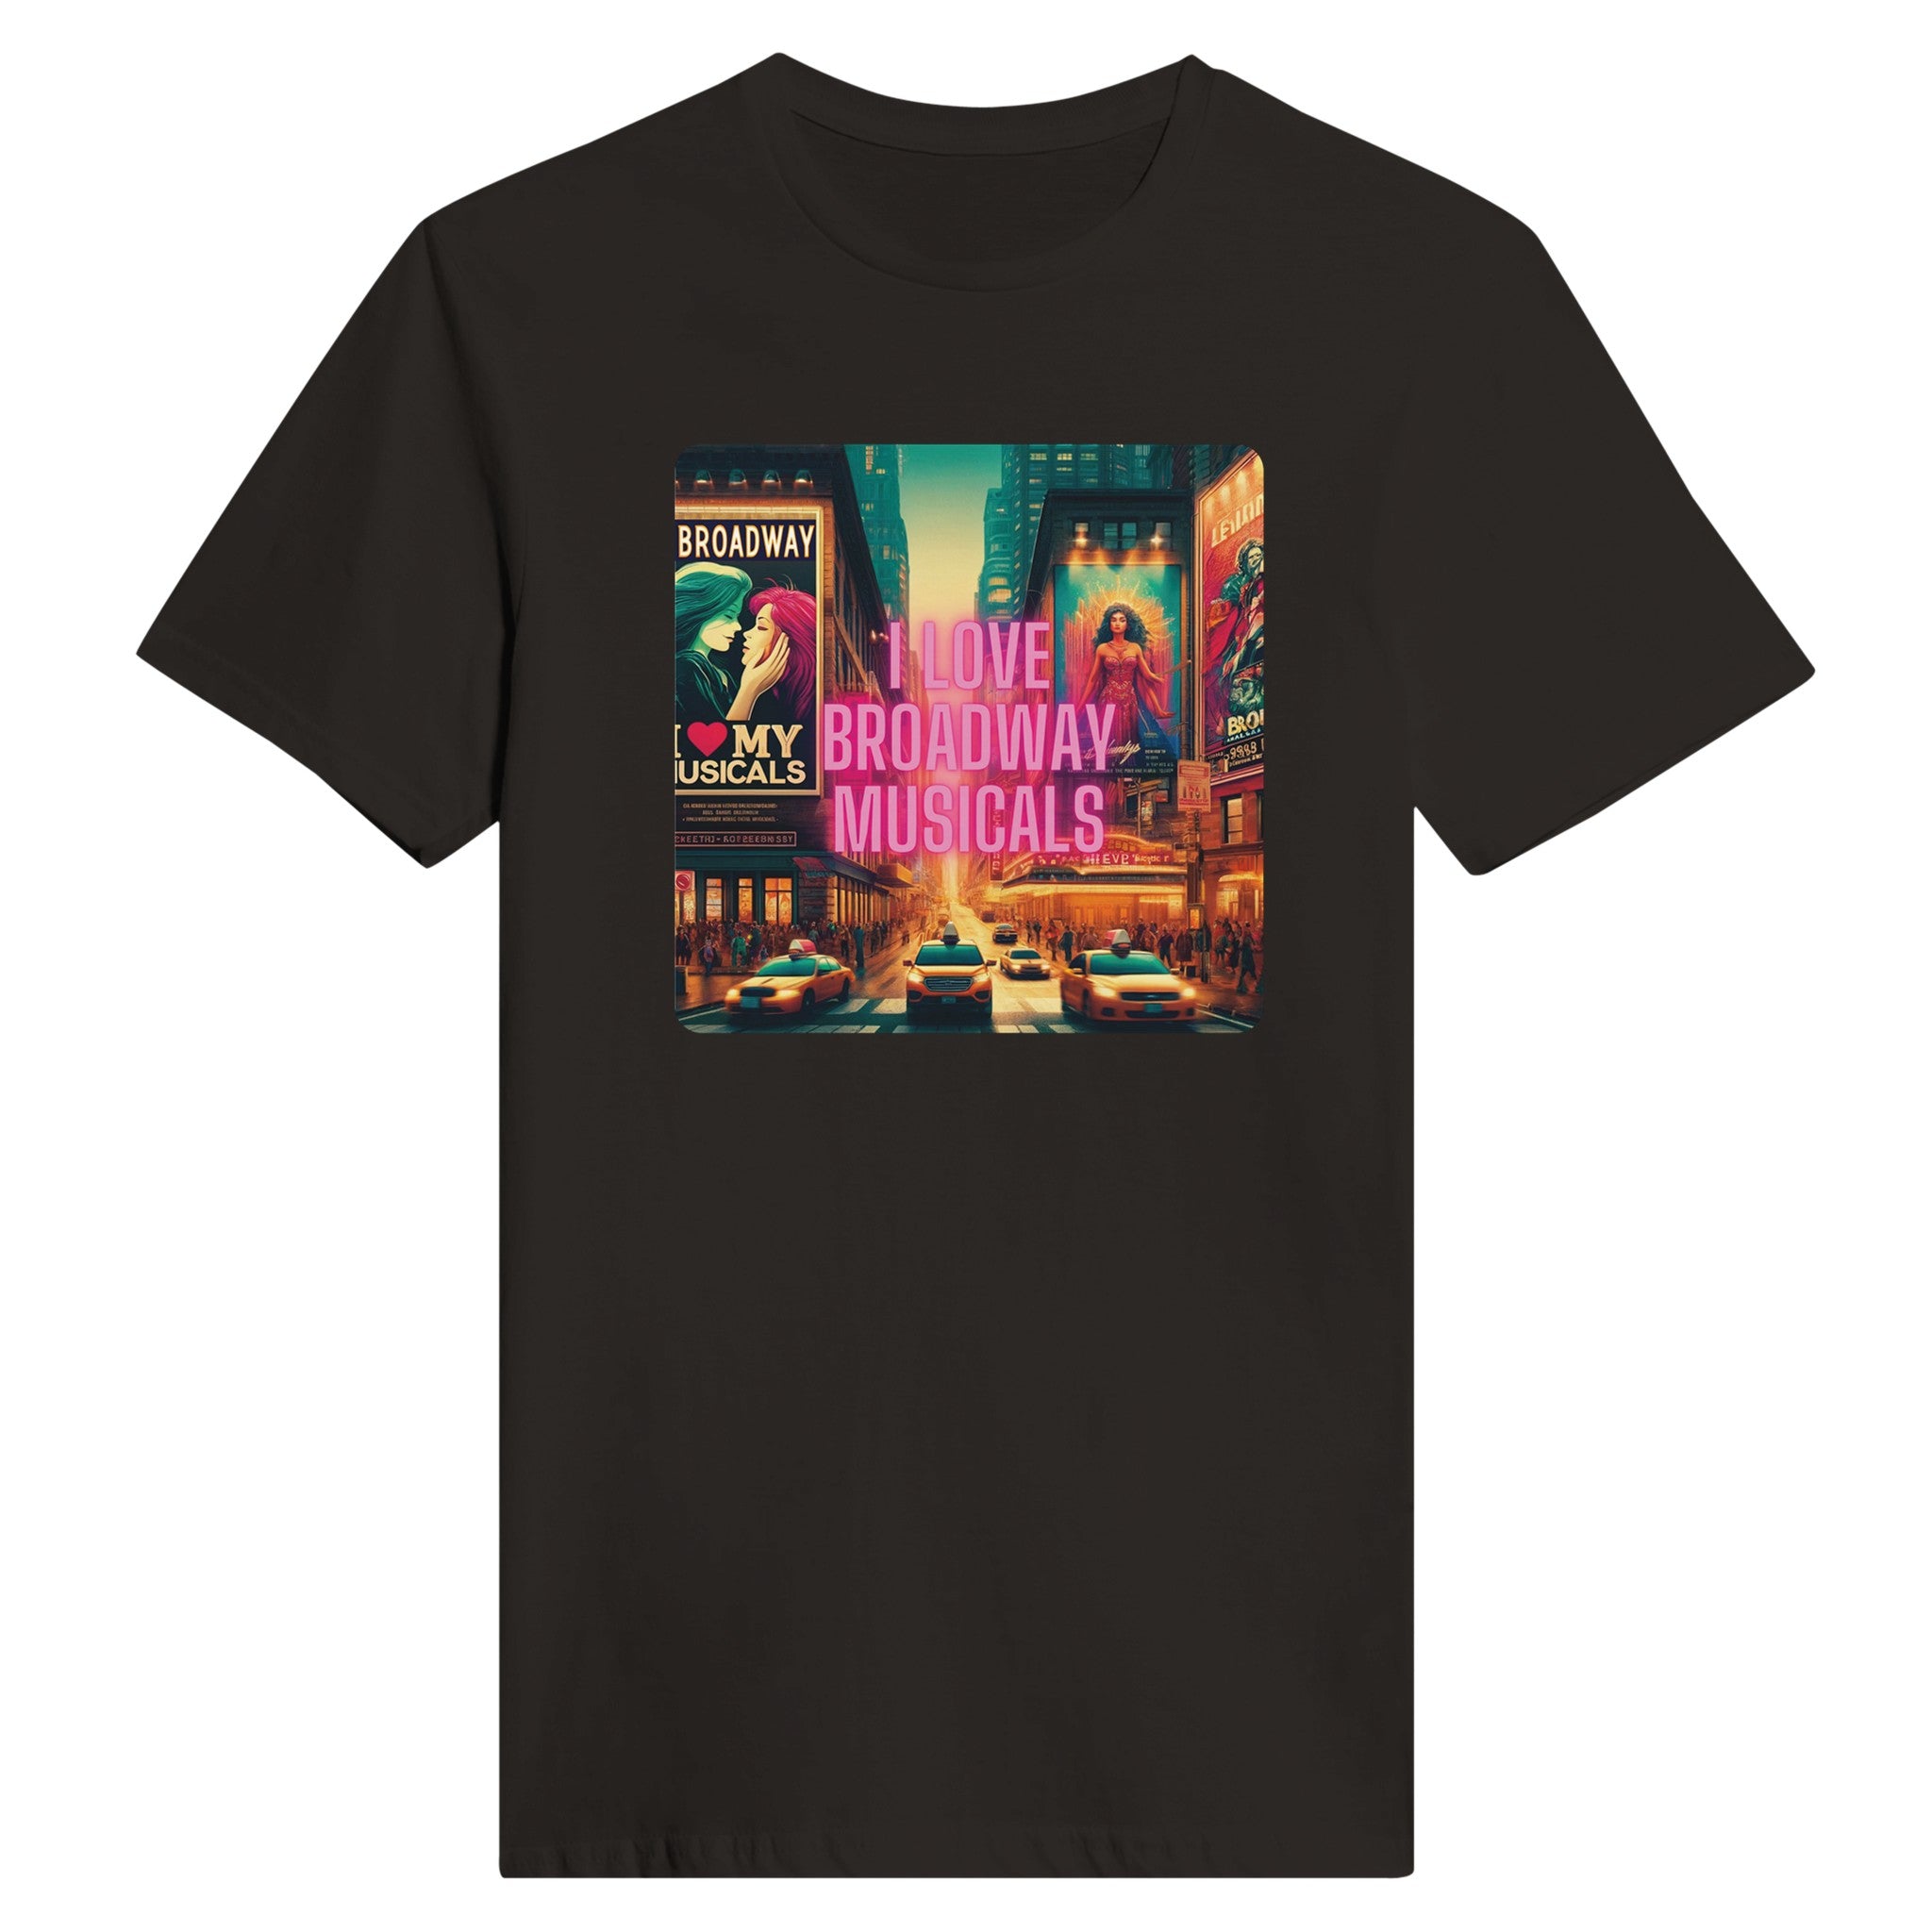 Classic Womens Crewneck "I Love Broadway Musical" T-shirt